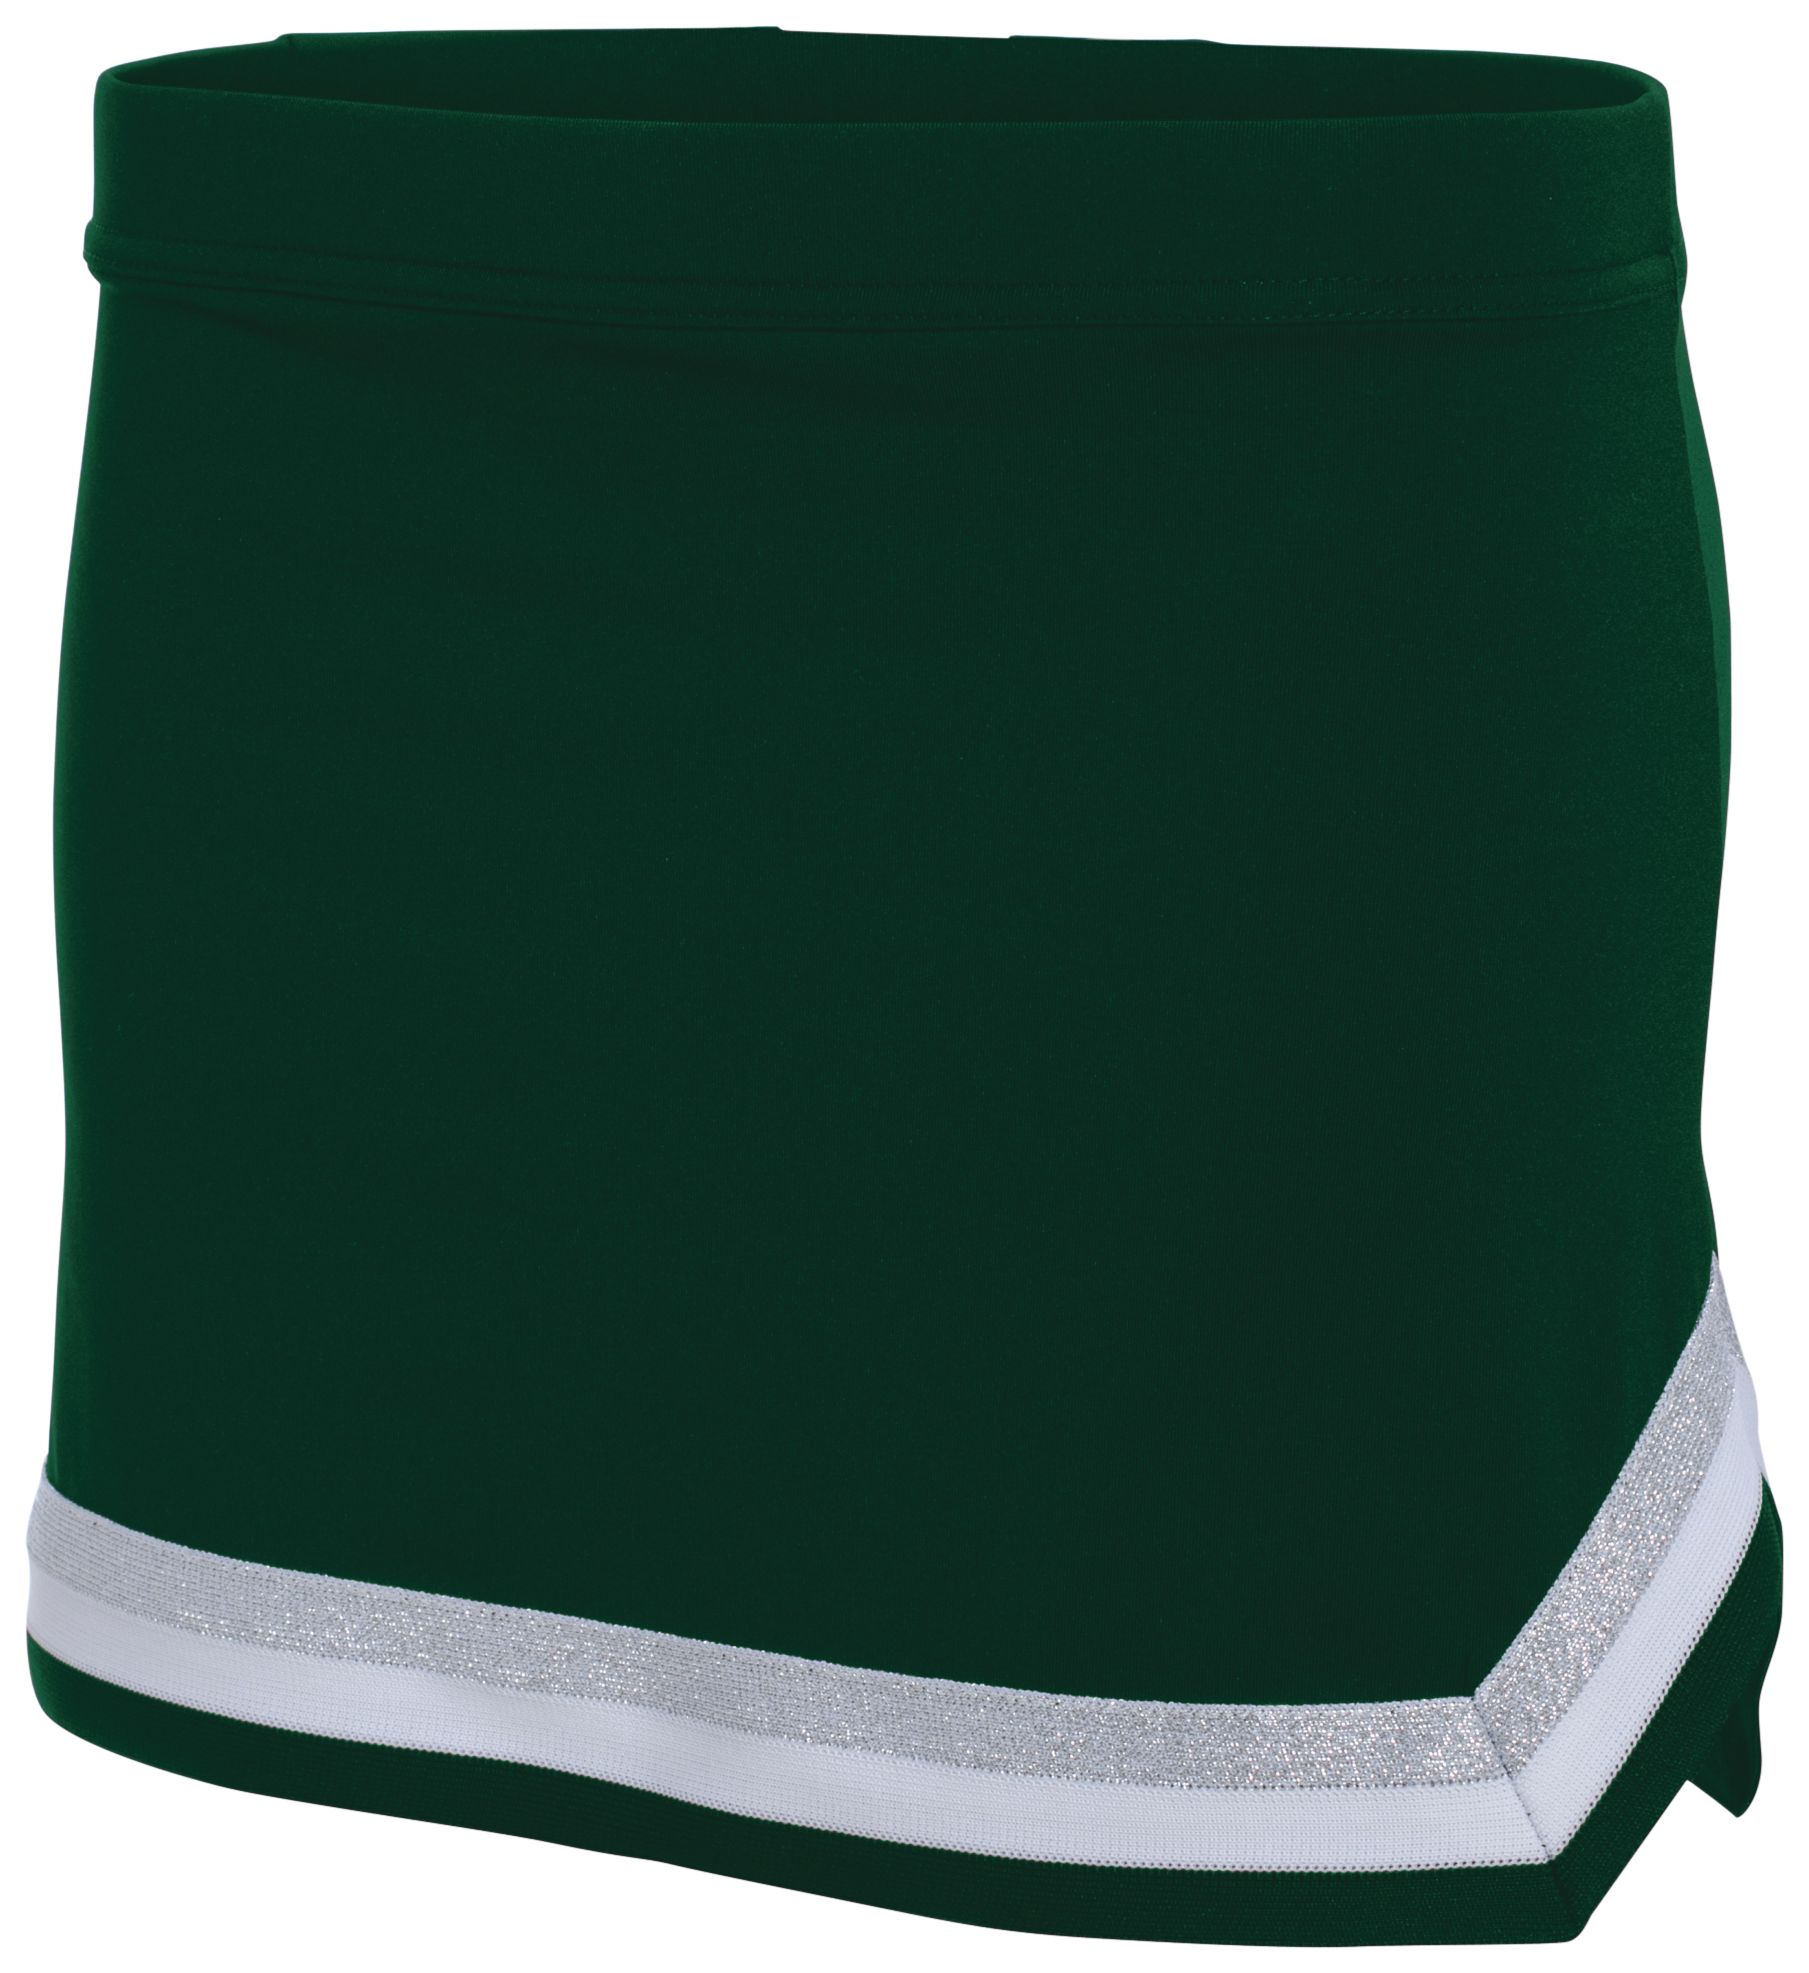 Augusta Activewear Ladies Liberty Skirt 